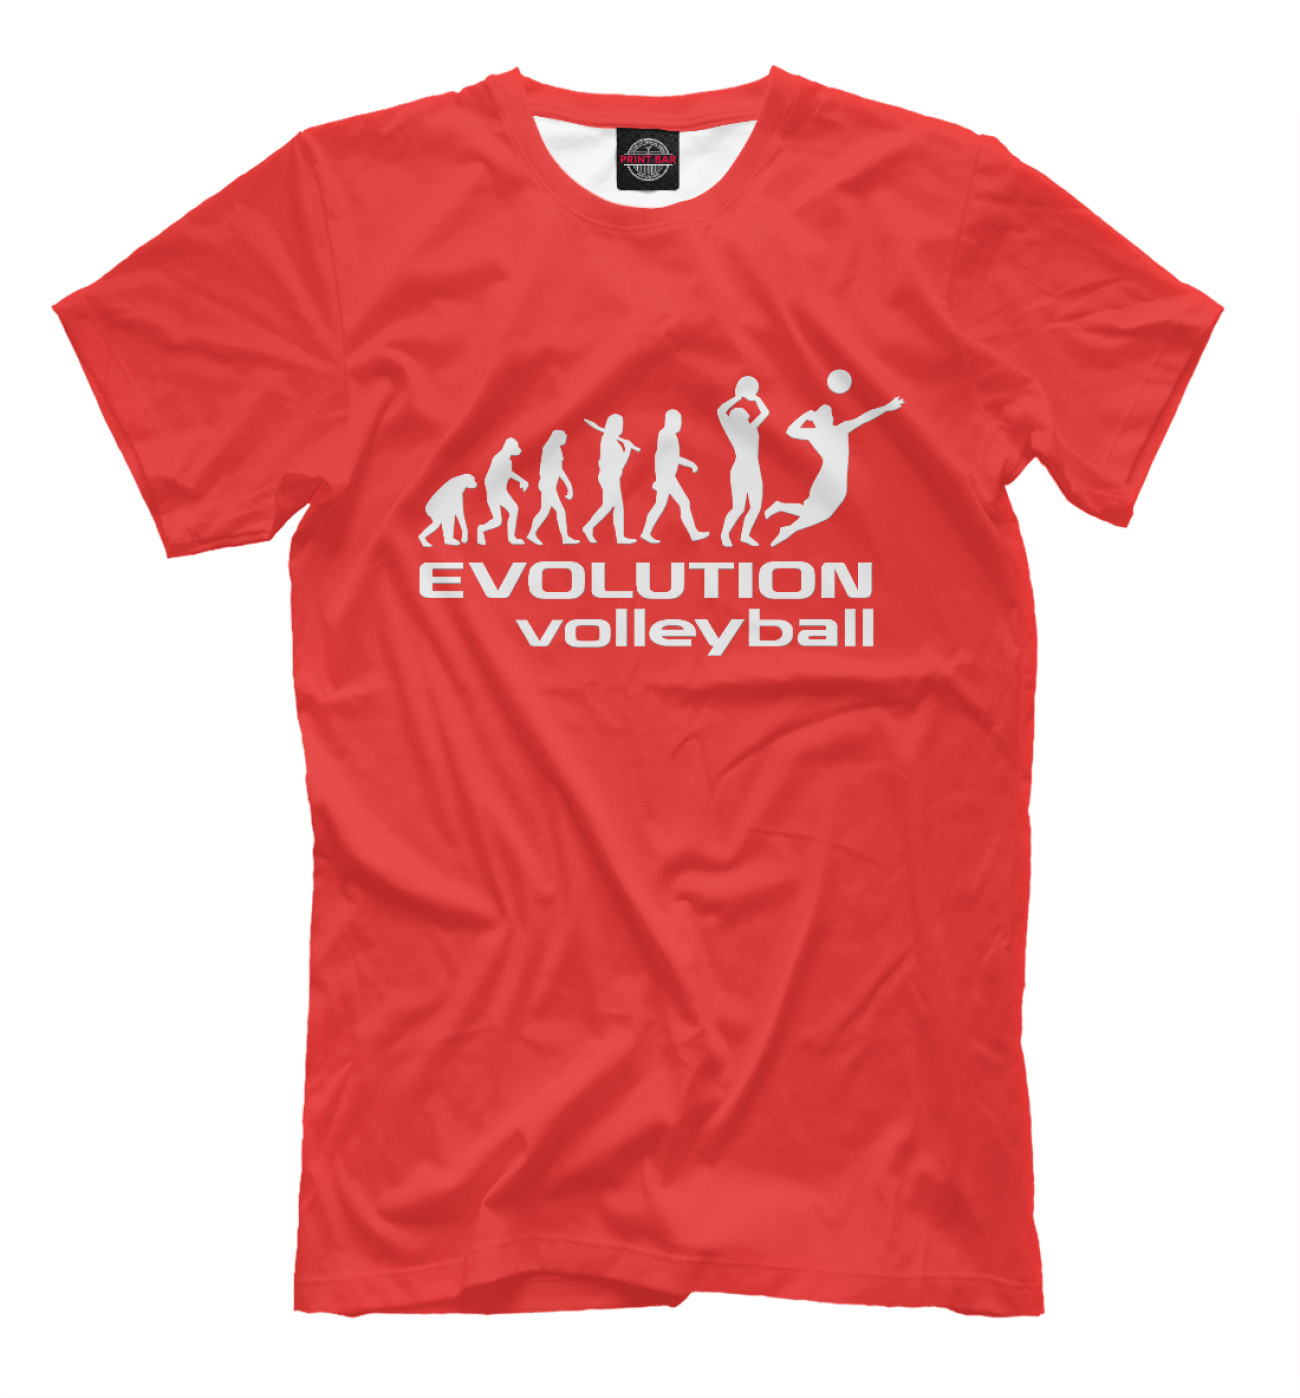 Мужская Футболка Evolution (volleyball), артикул: VLB-532402-fut-2